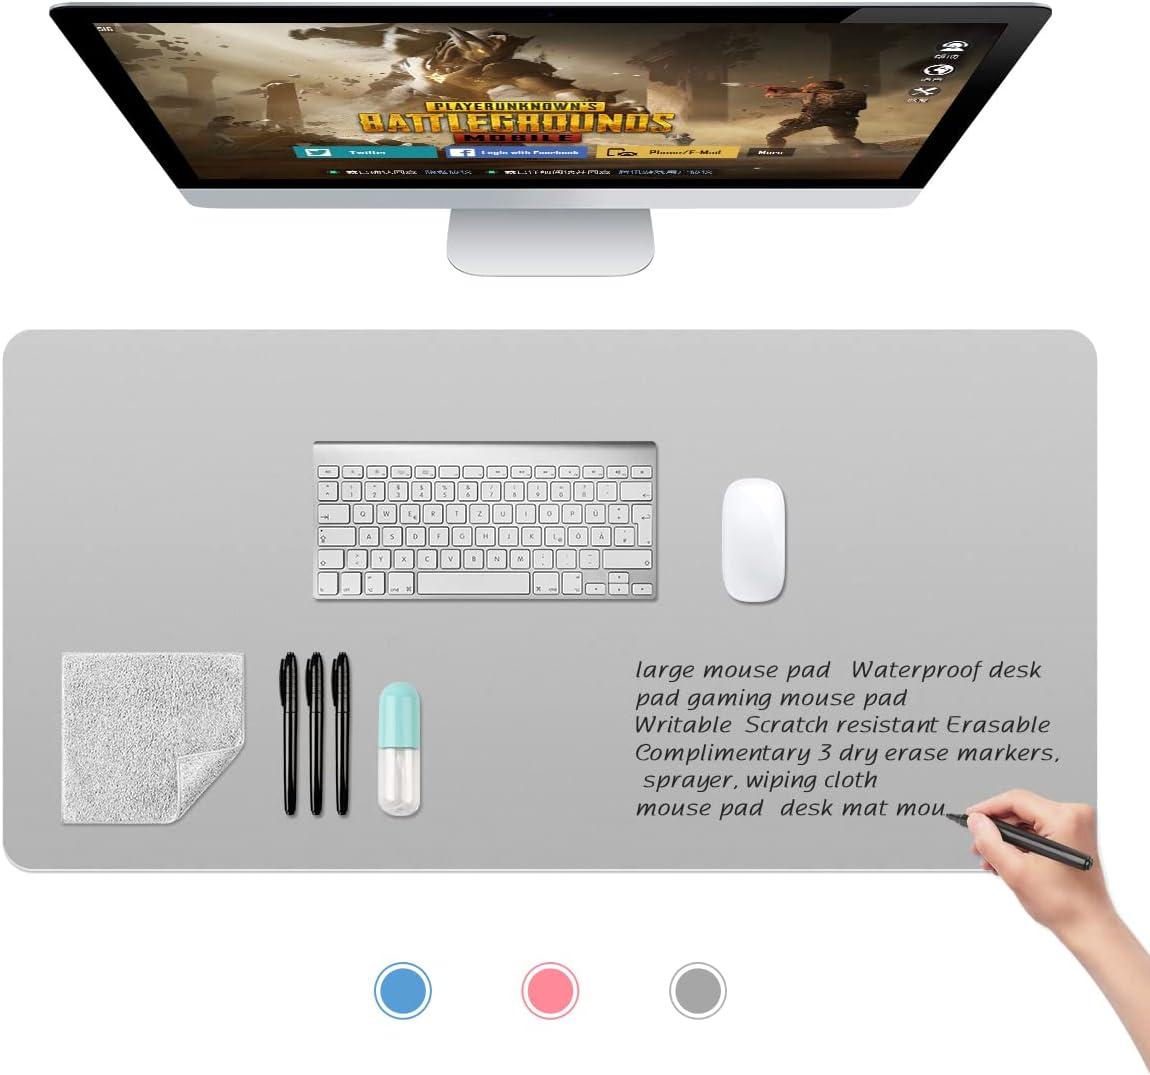 fabutier large gaming mouse pad writable and erasable desk mat waterproof desk pad protector mat  fabutier